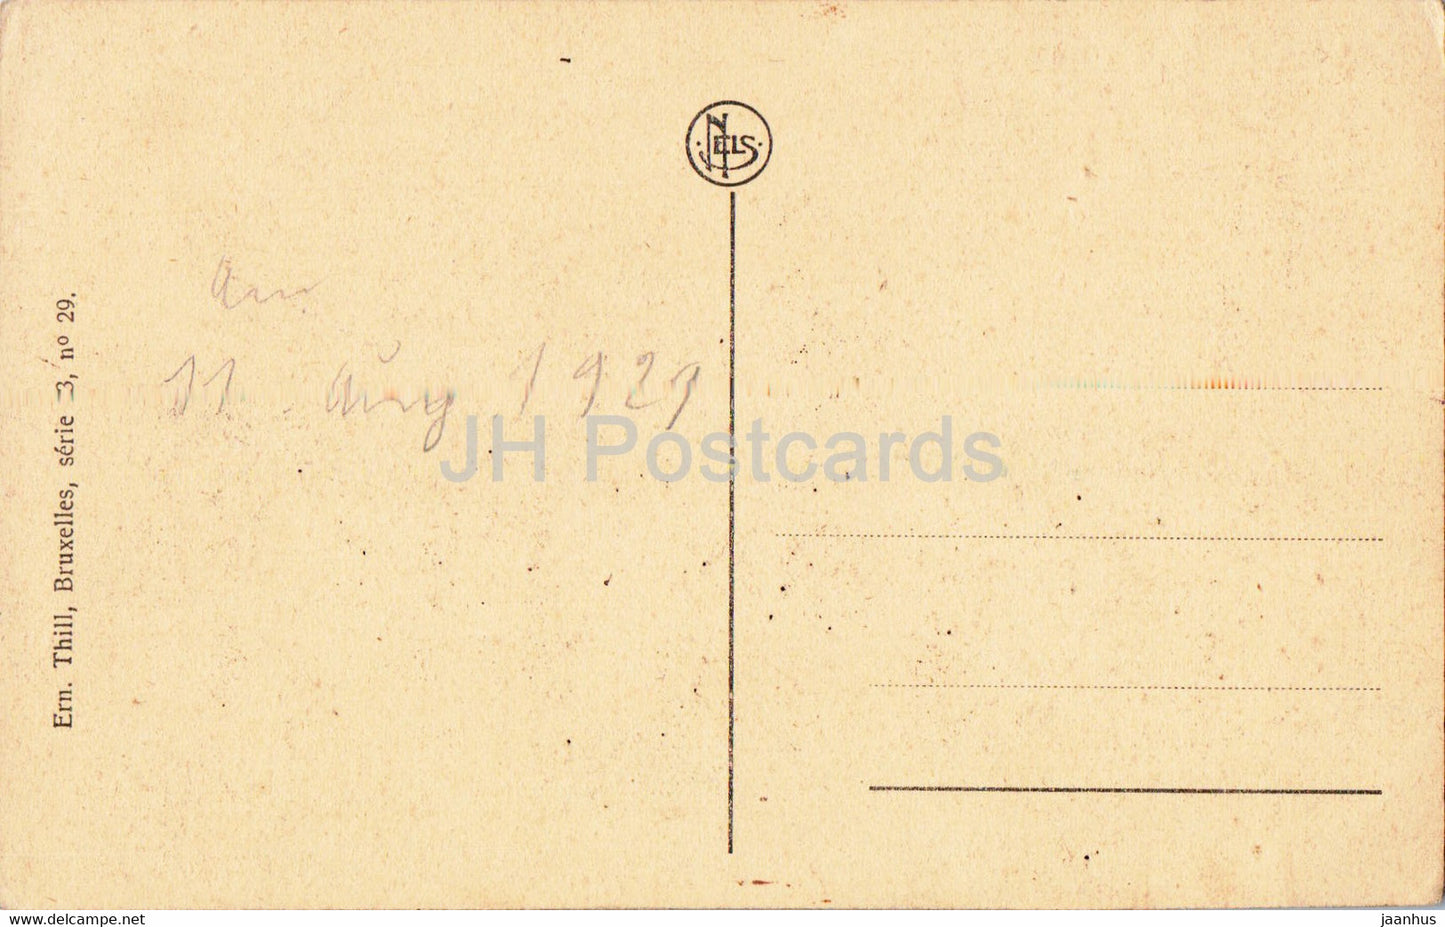 Ostende - Oostende - Le Kursaal et la Plage - Strand - alte Postkarte - 1921 - Belgien - gebraucht